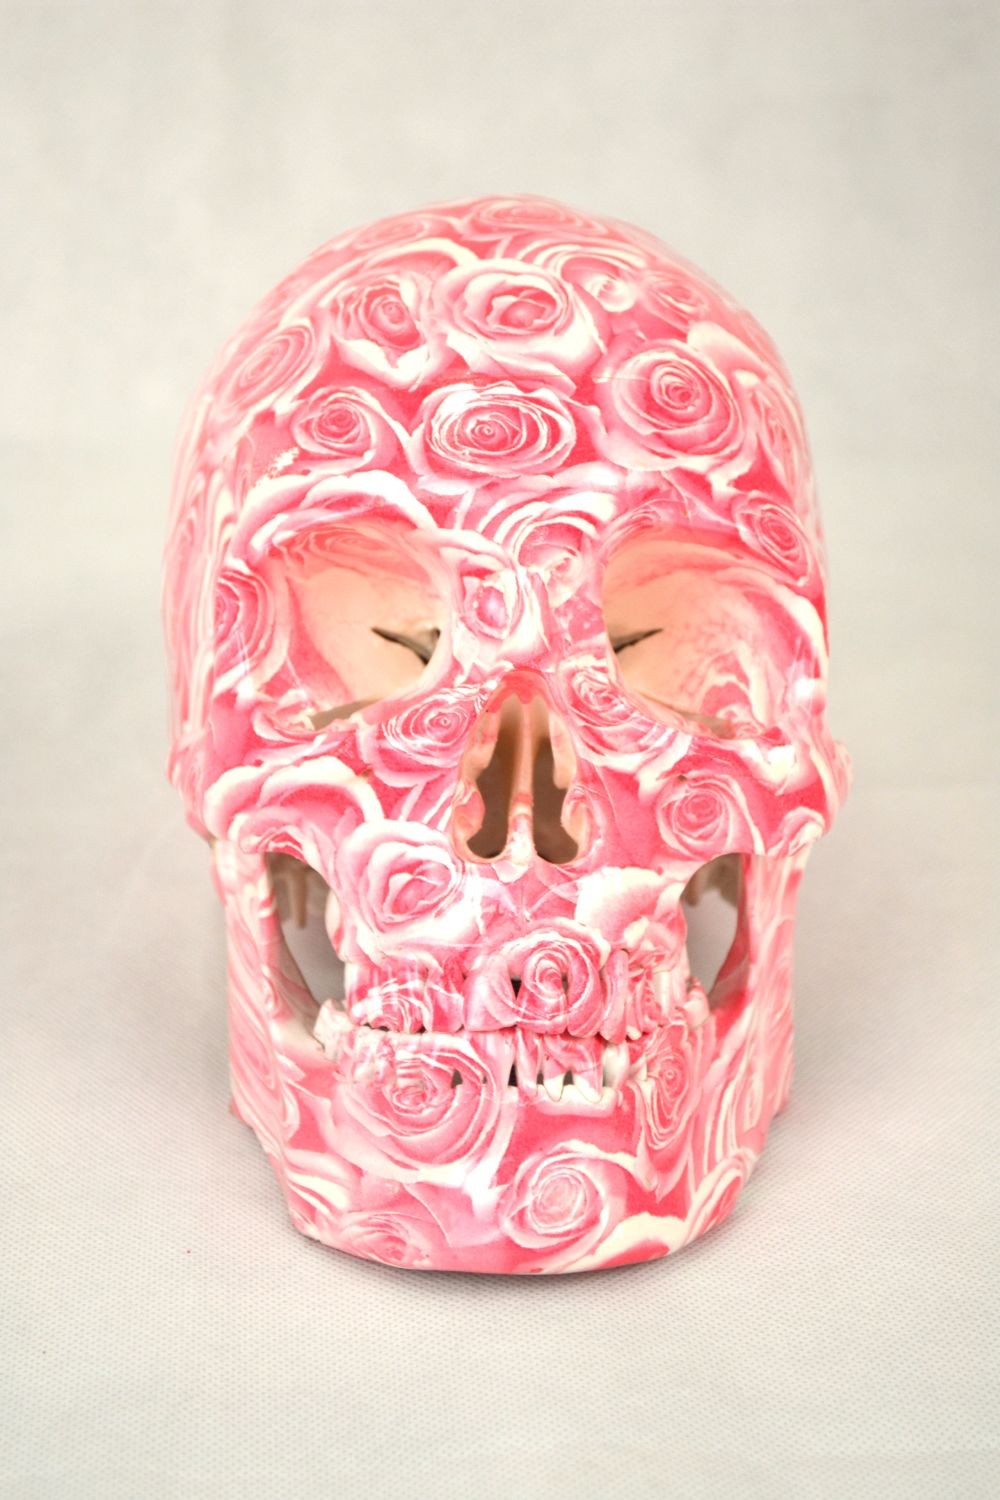 High Degree Emulation 1:1 Human Medical Skull Art Replica, 2-part, Life Size Rose White